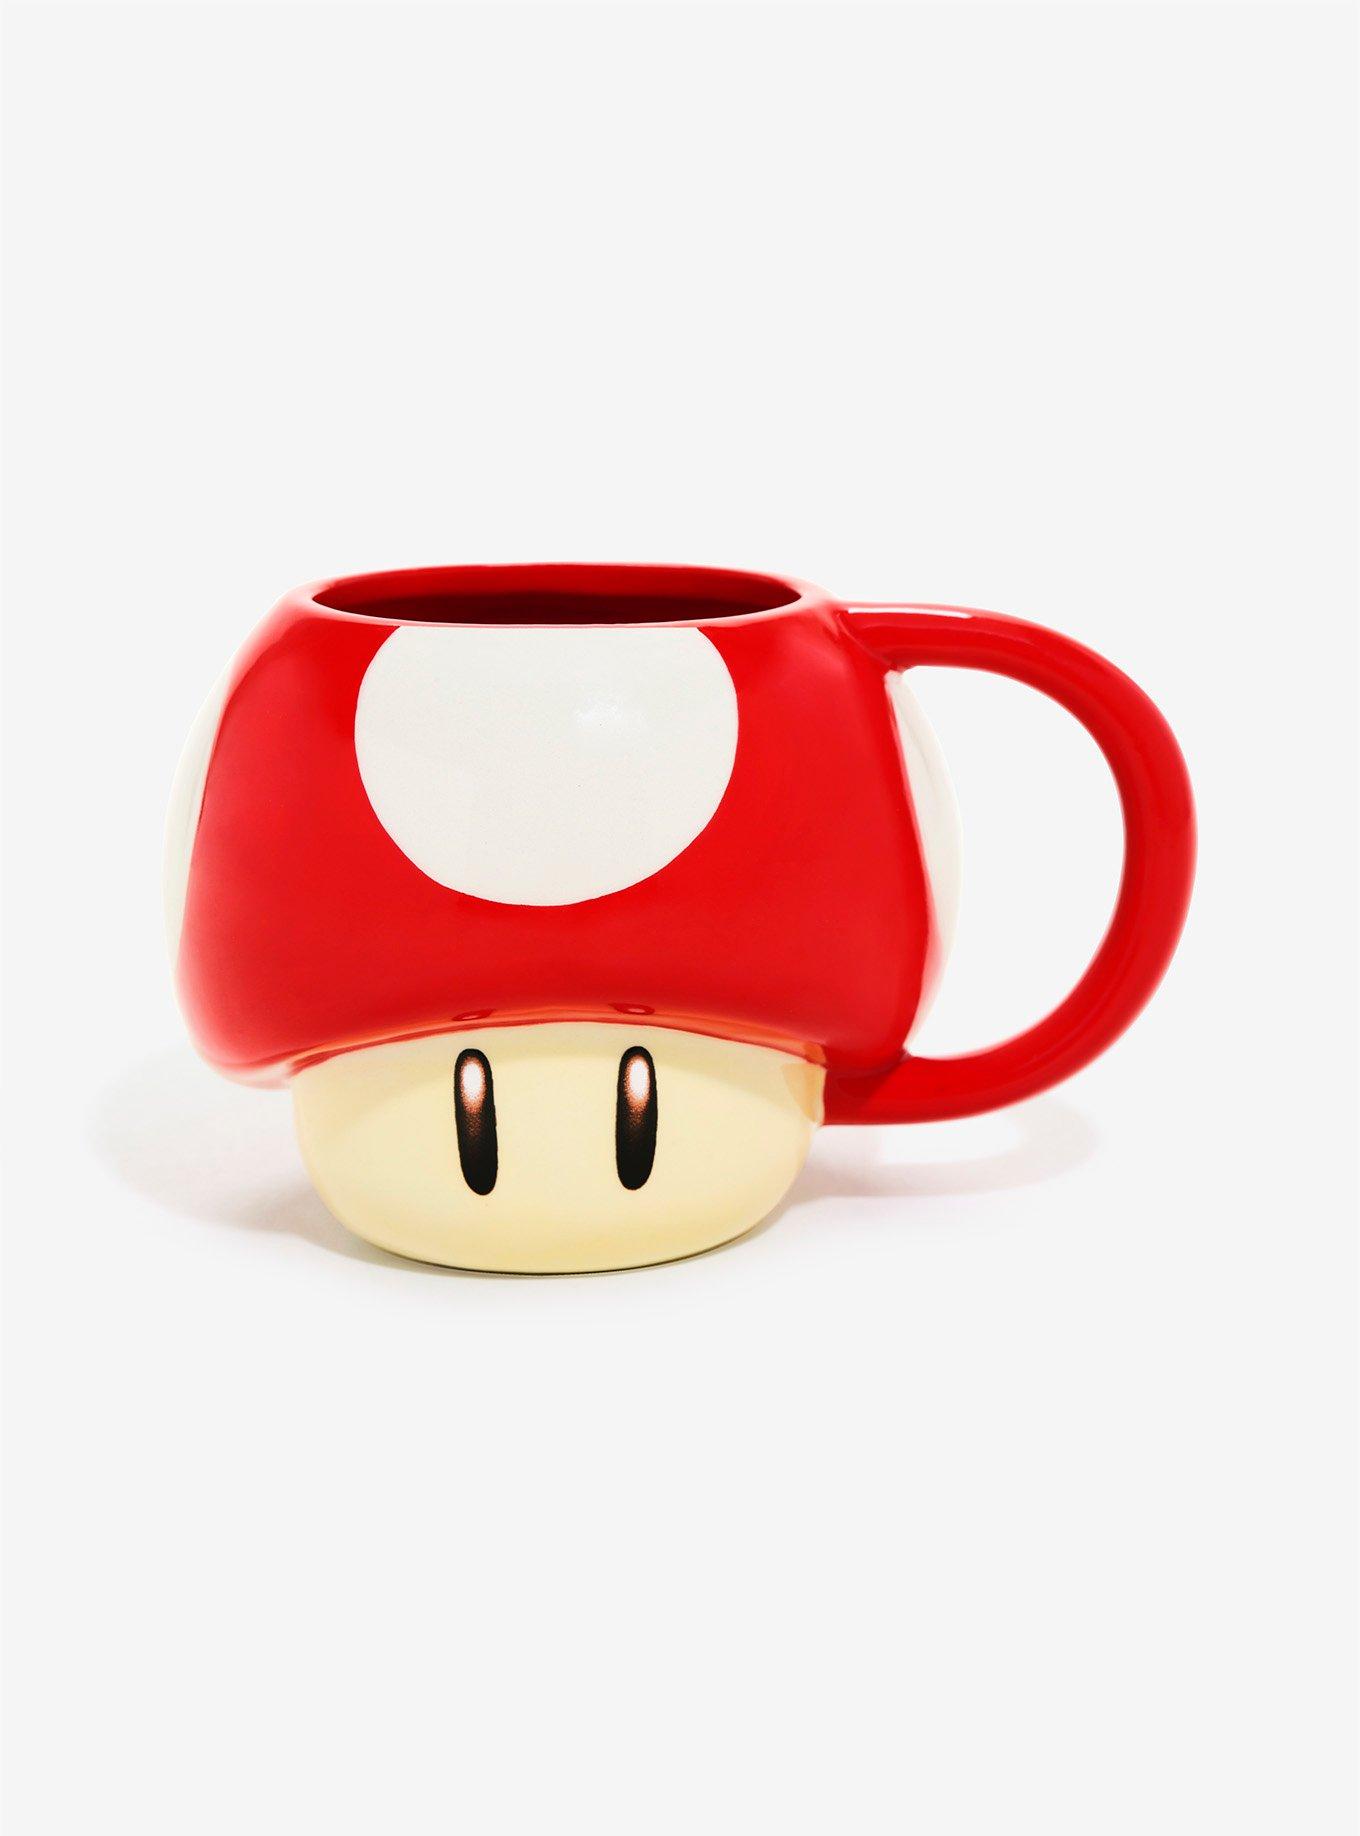 Mushroom Kingdom Collection - Mario & Goomba Mug